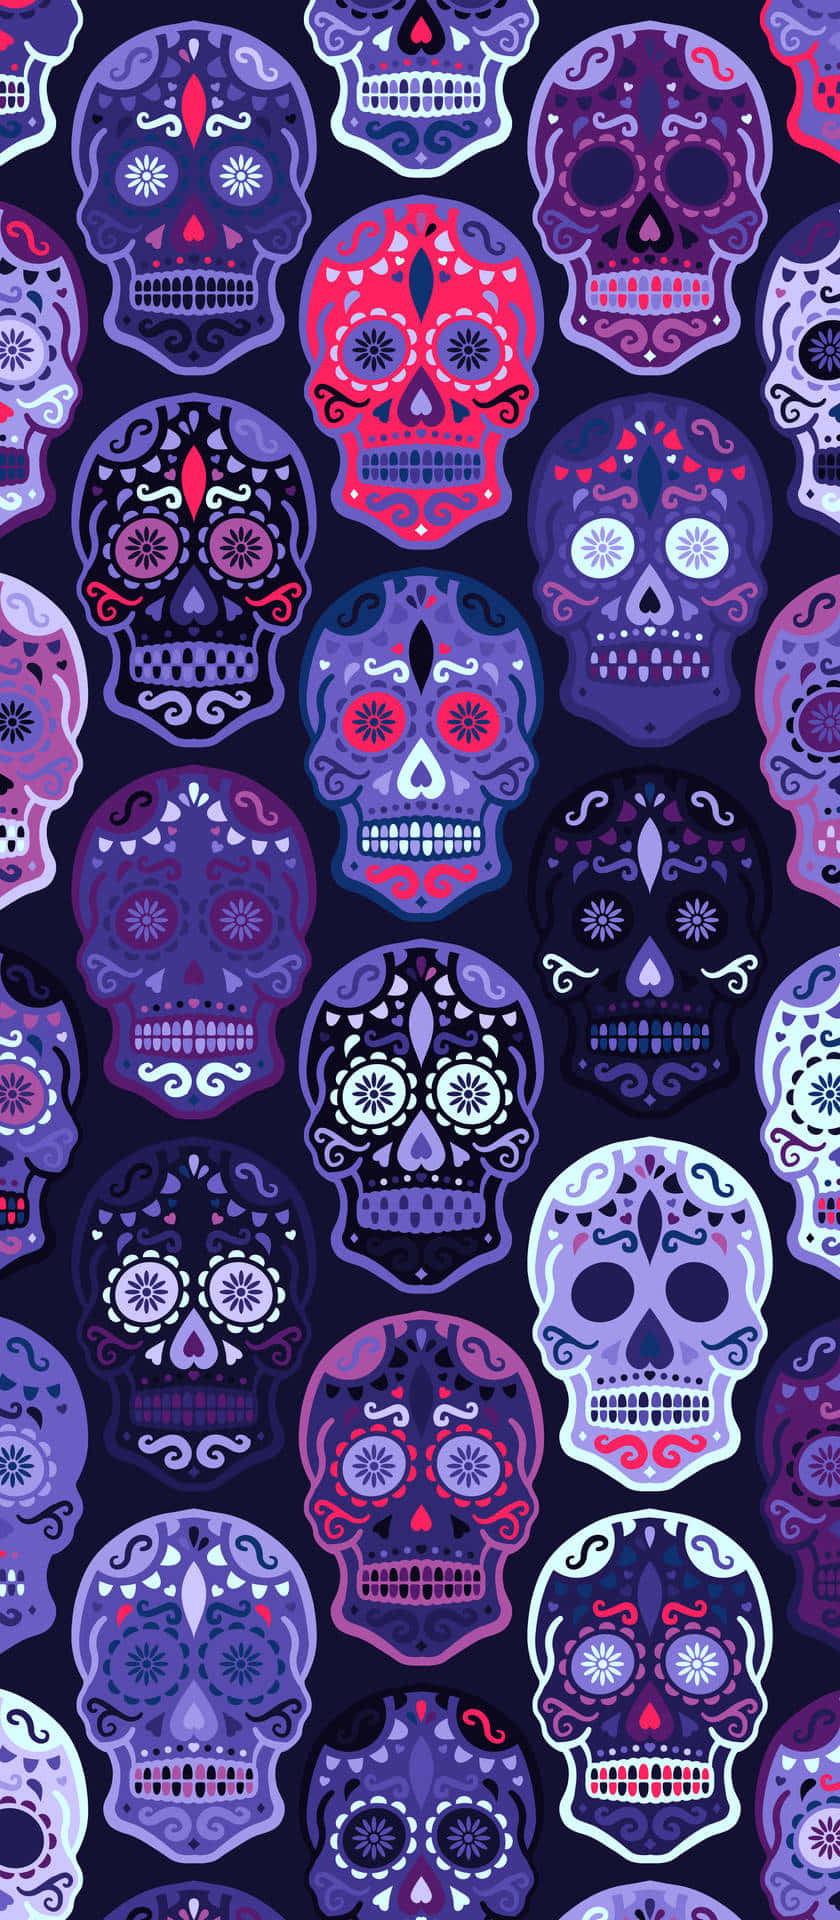 Stylish Sugar Skull Phone Wallpaper